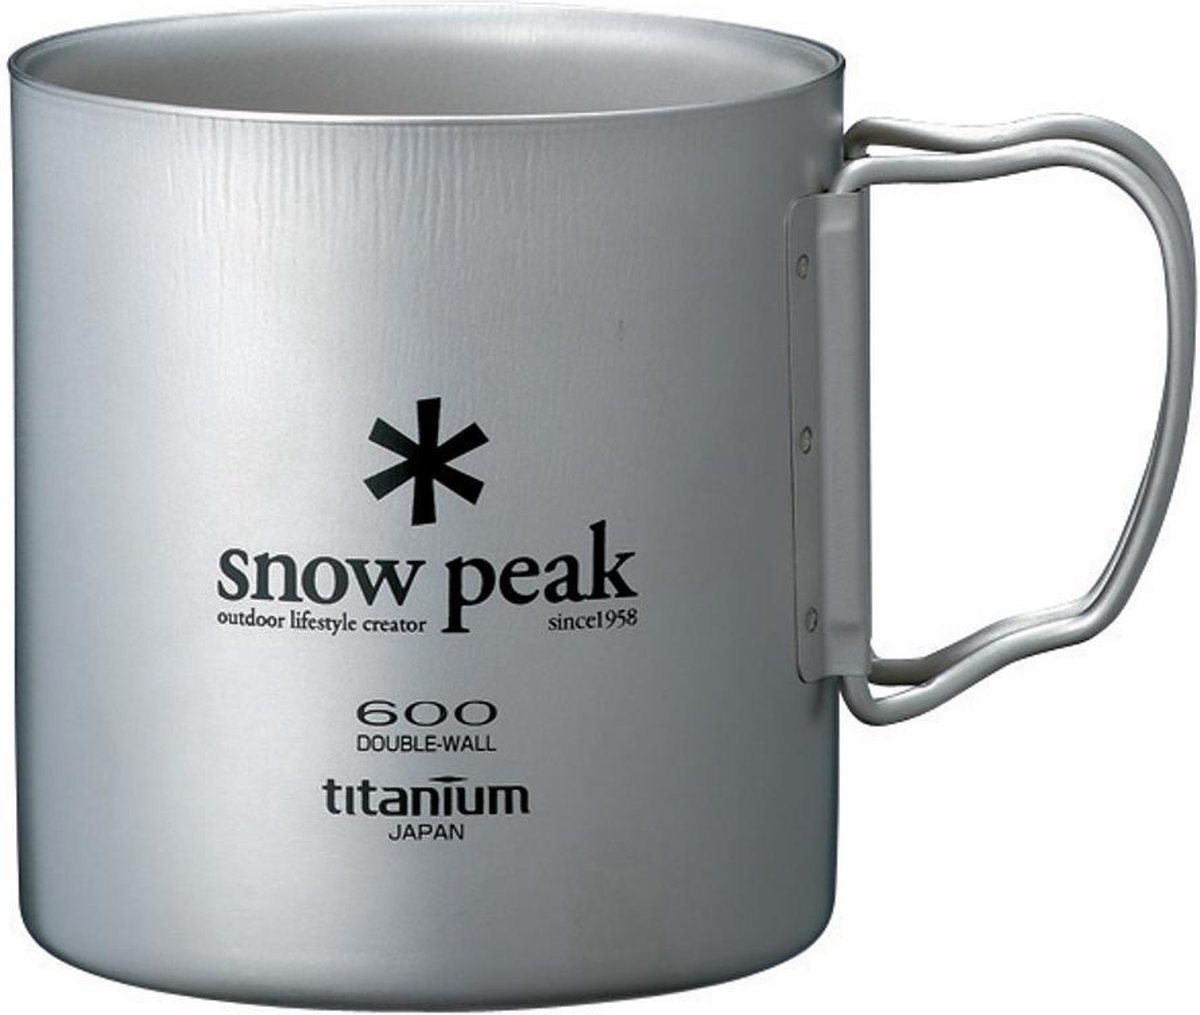 Hubert Hudson Maken beloning Snow Peak Double Wall Cup 600 beker titanium grijs | bol.com